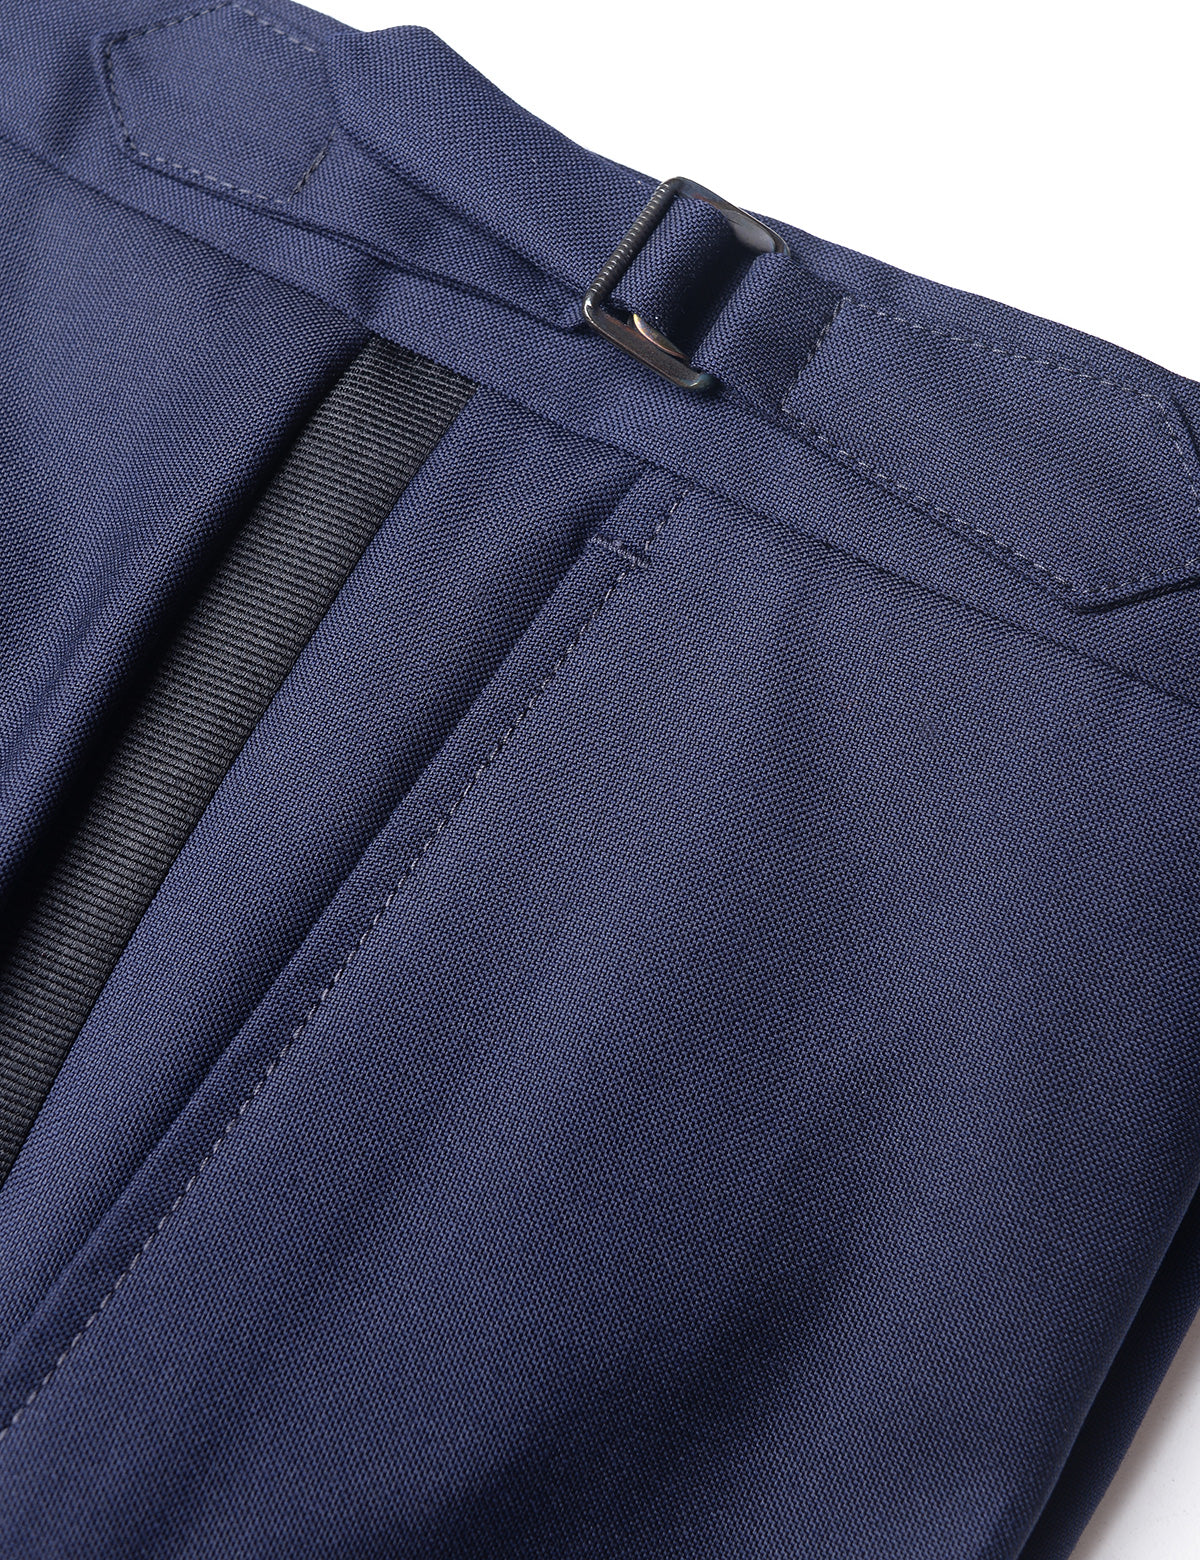 Detail of BKT50 Tuxedo Trouser in Super 110s - Navy with Grosgrain Stripe showing pocket, side adjuster, grosgrain stripe